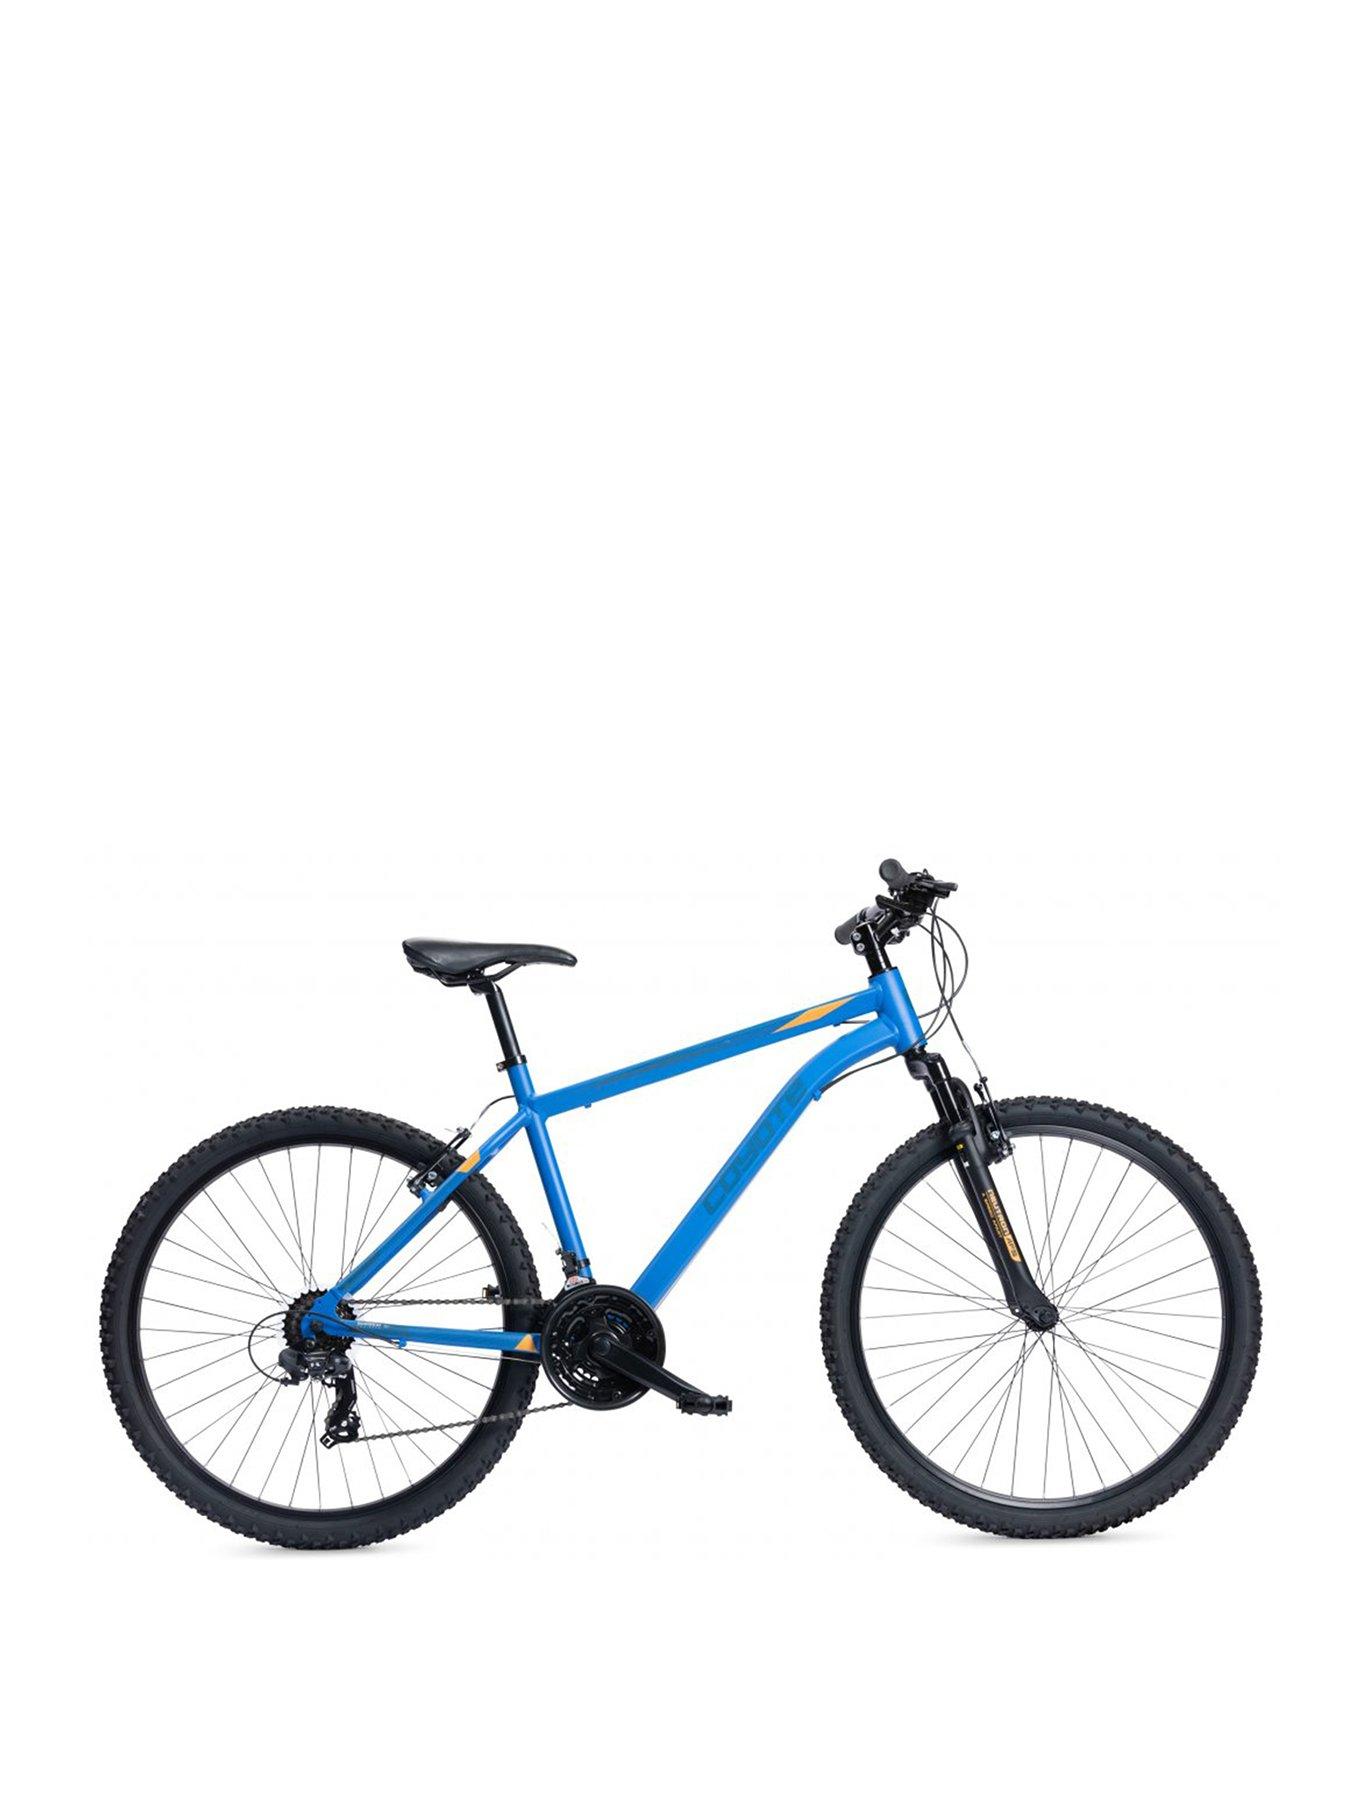 26 inch wheel 14 inch frame bike